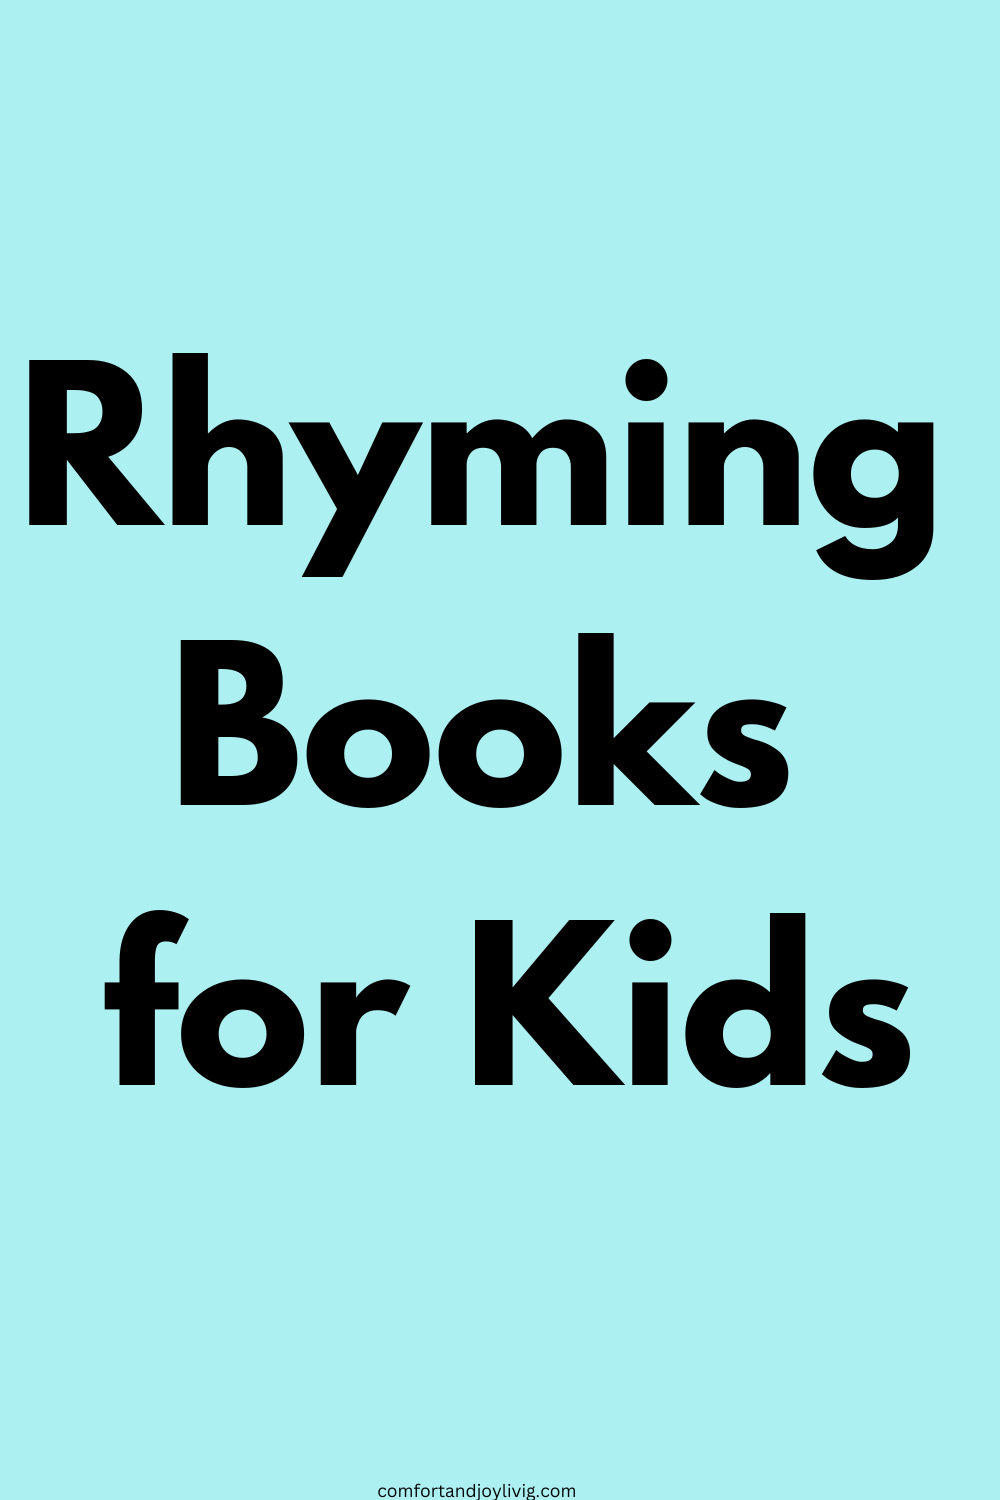 Rhyming Books for Kids